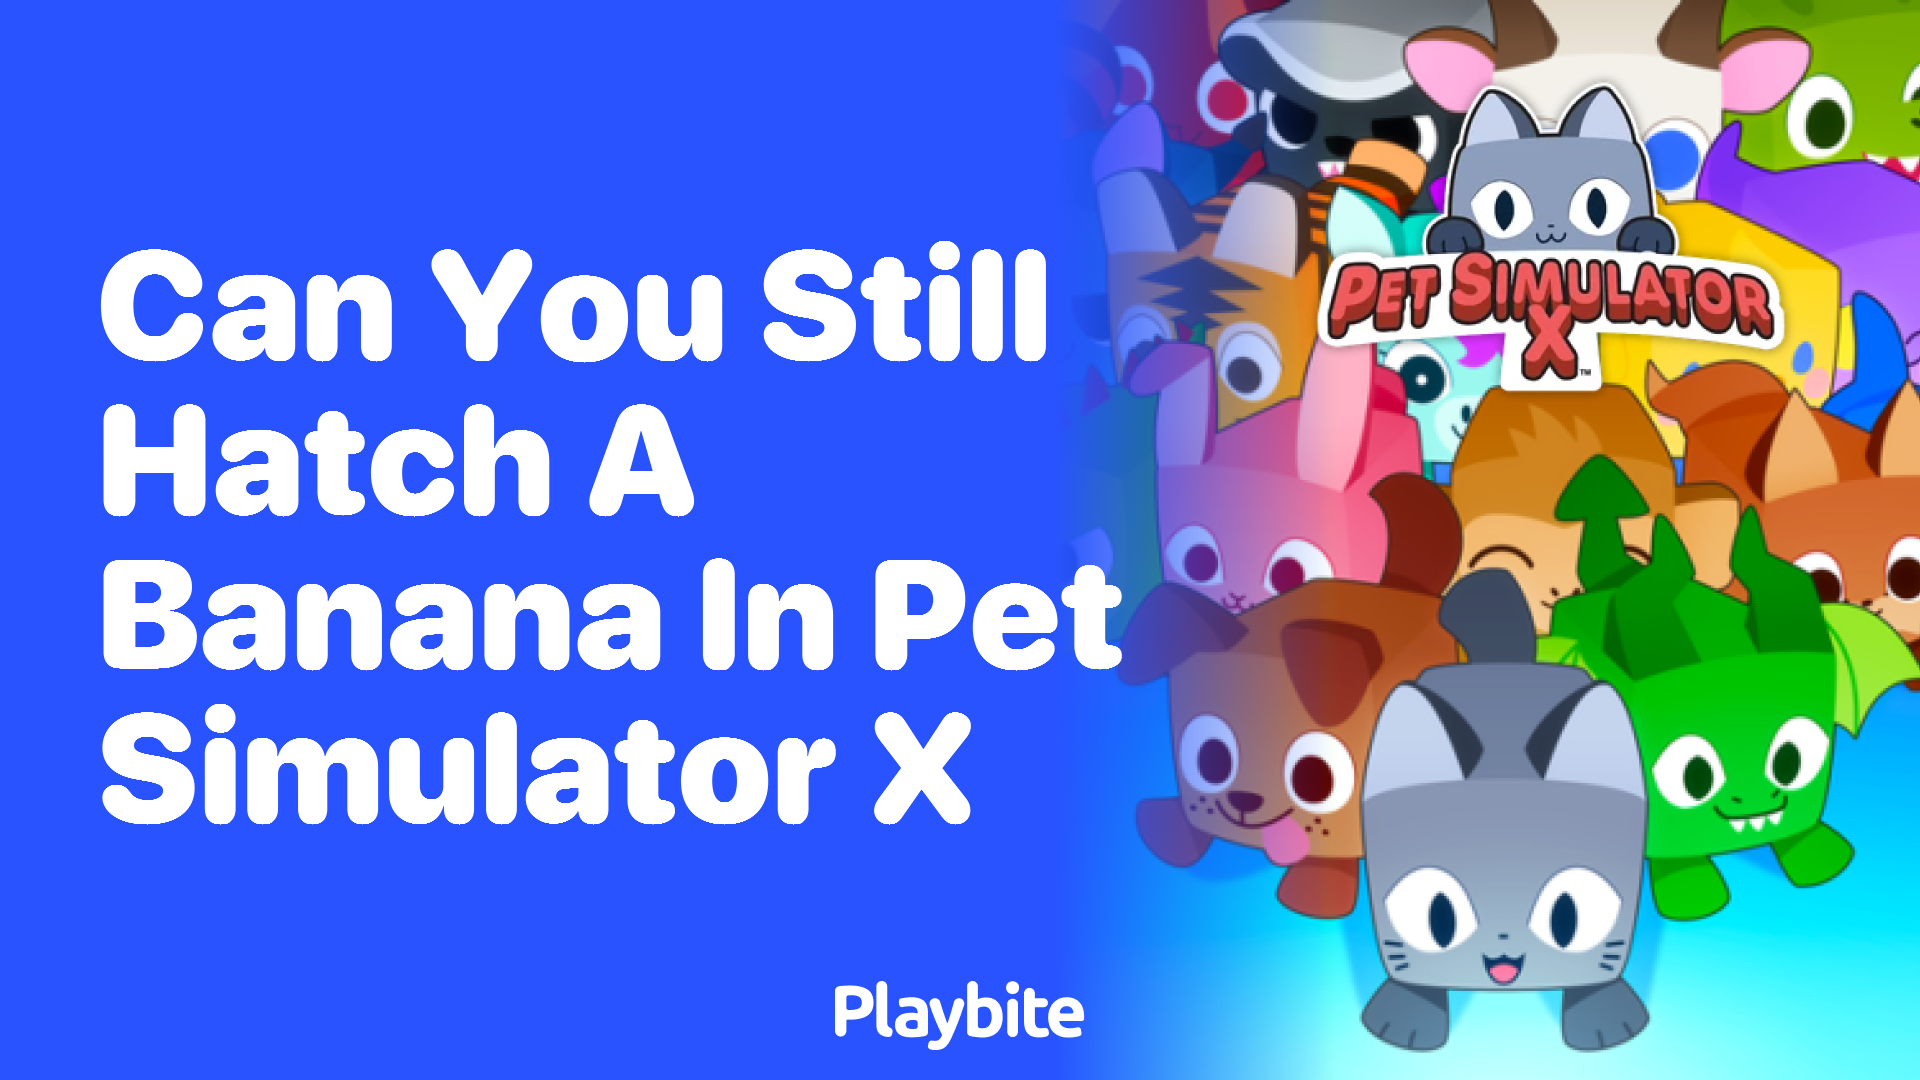 Can You Still Hatch a Banana in Pet Simulator X?